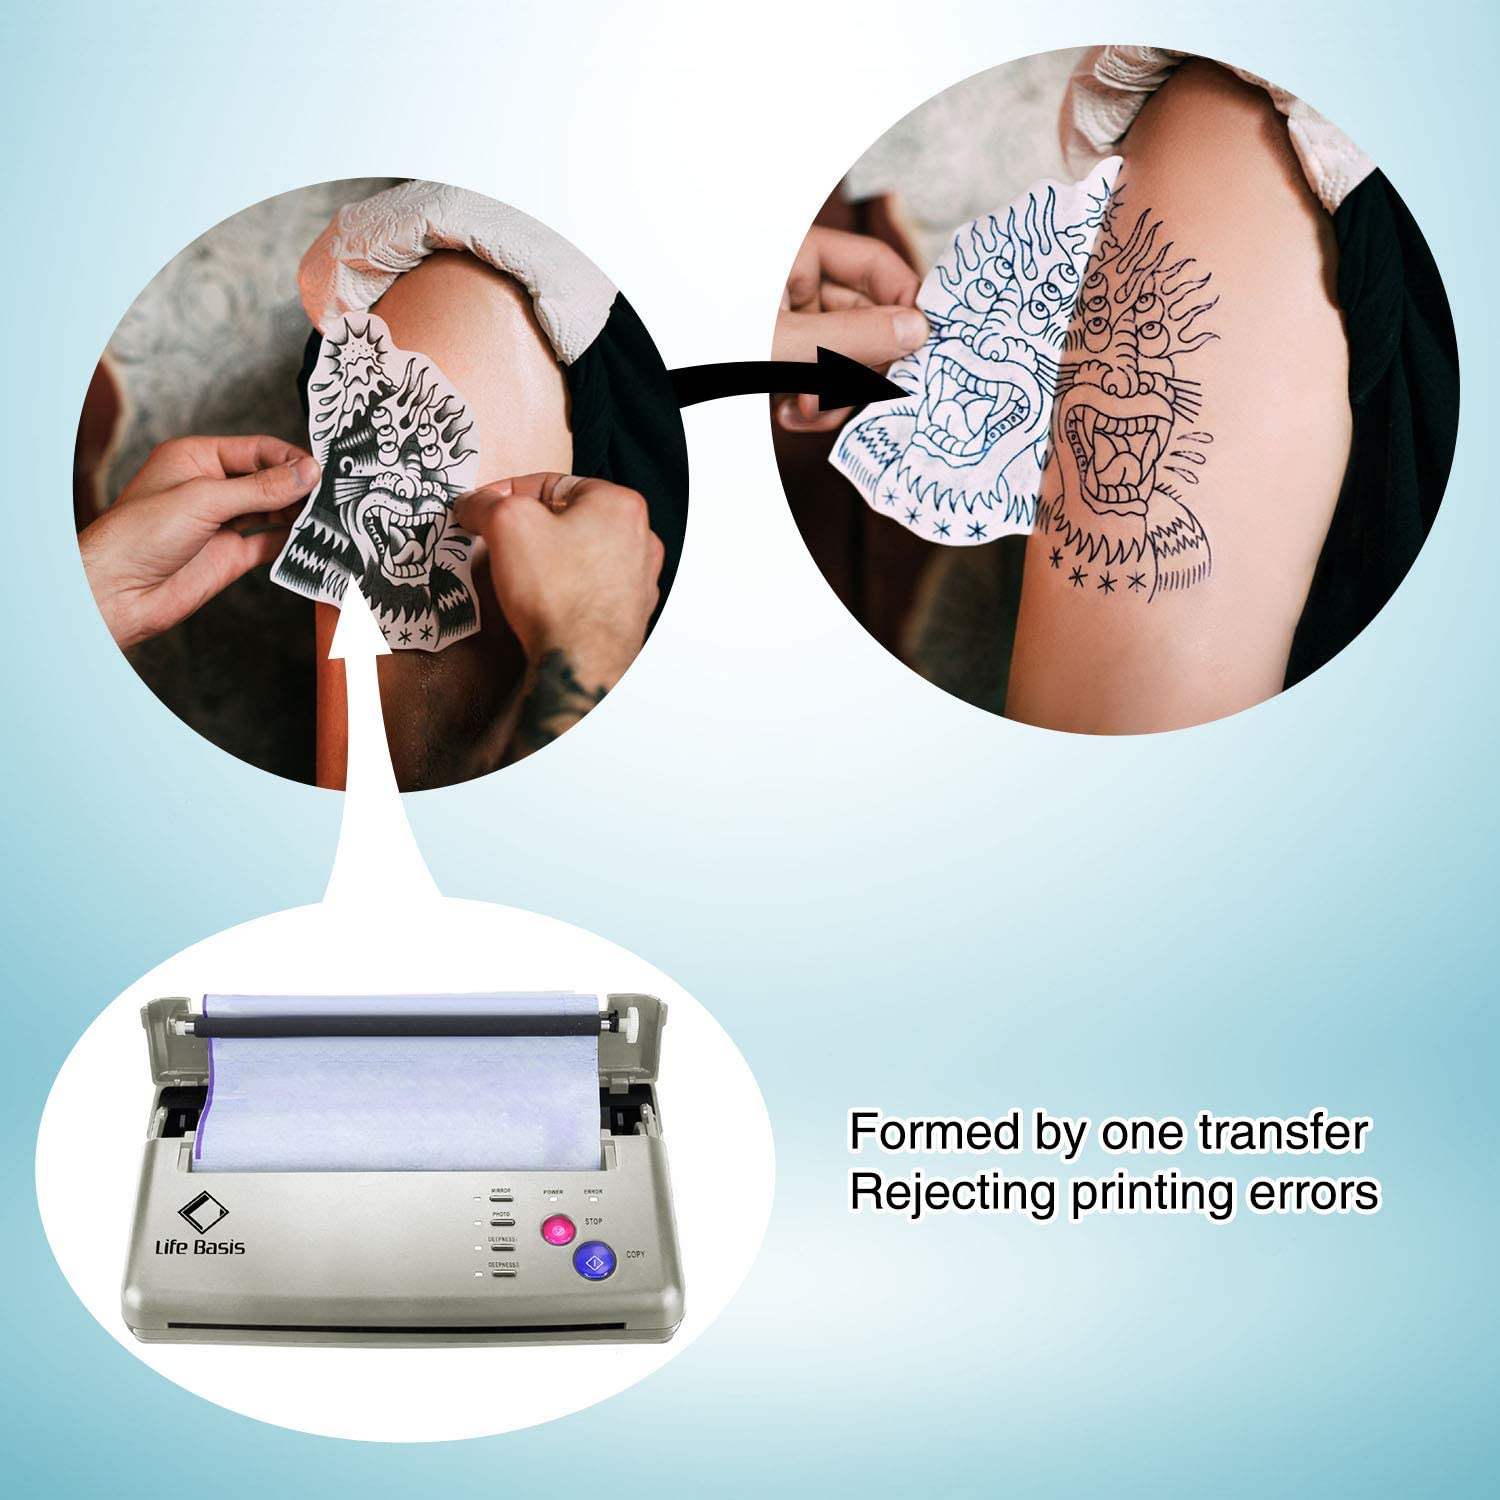 20-Pieces: Tattoo Transfer Paper 4 Layers Tattooing Skin Tattoo Kit A4